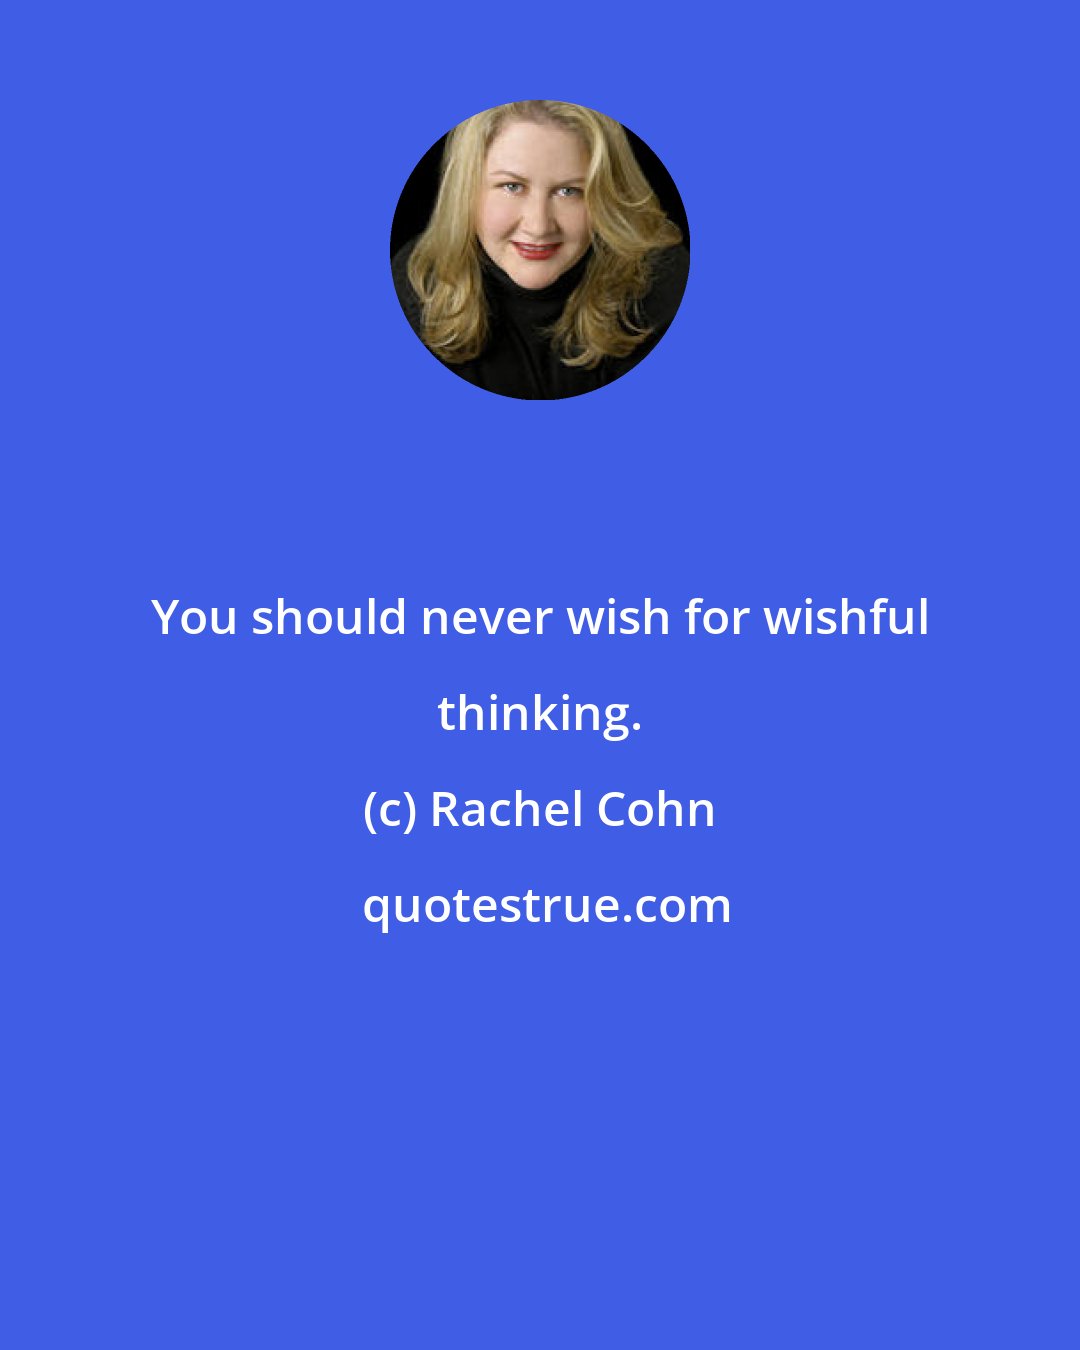 Rachel Cohn: You should never wish for wishful thinking.